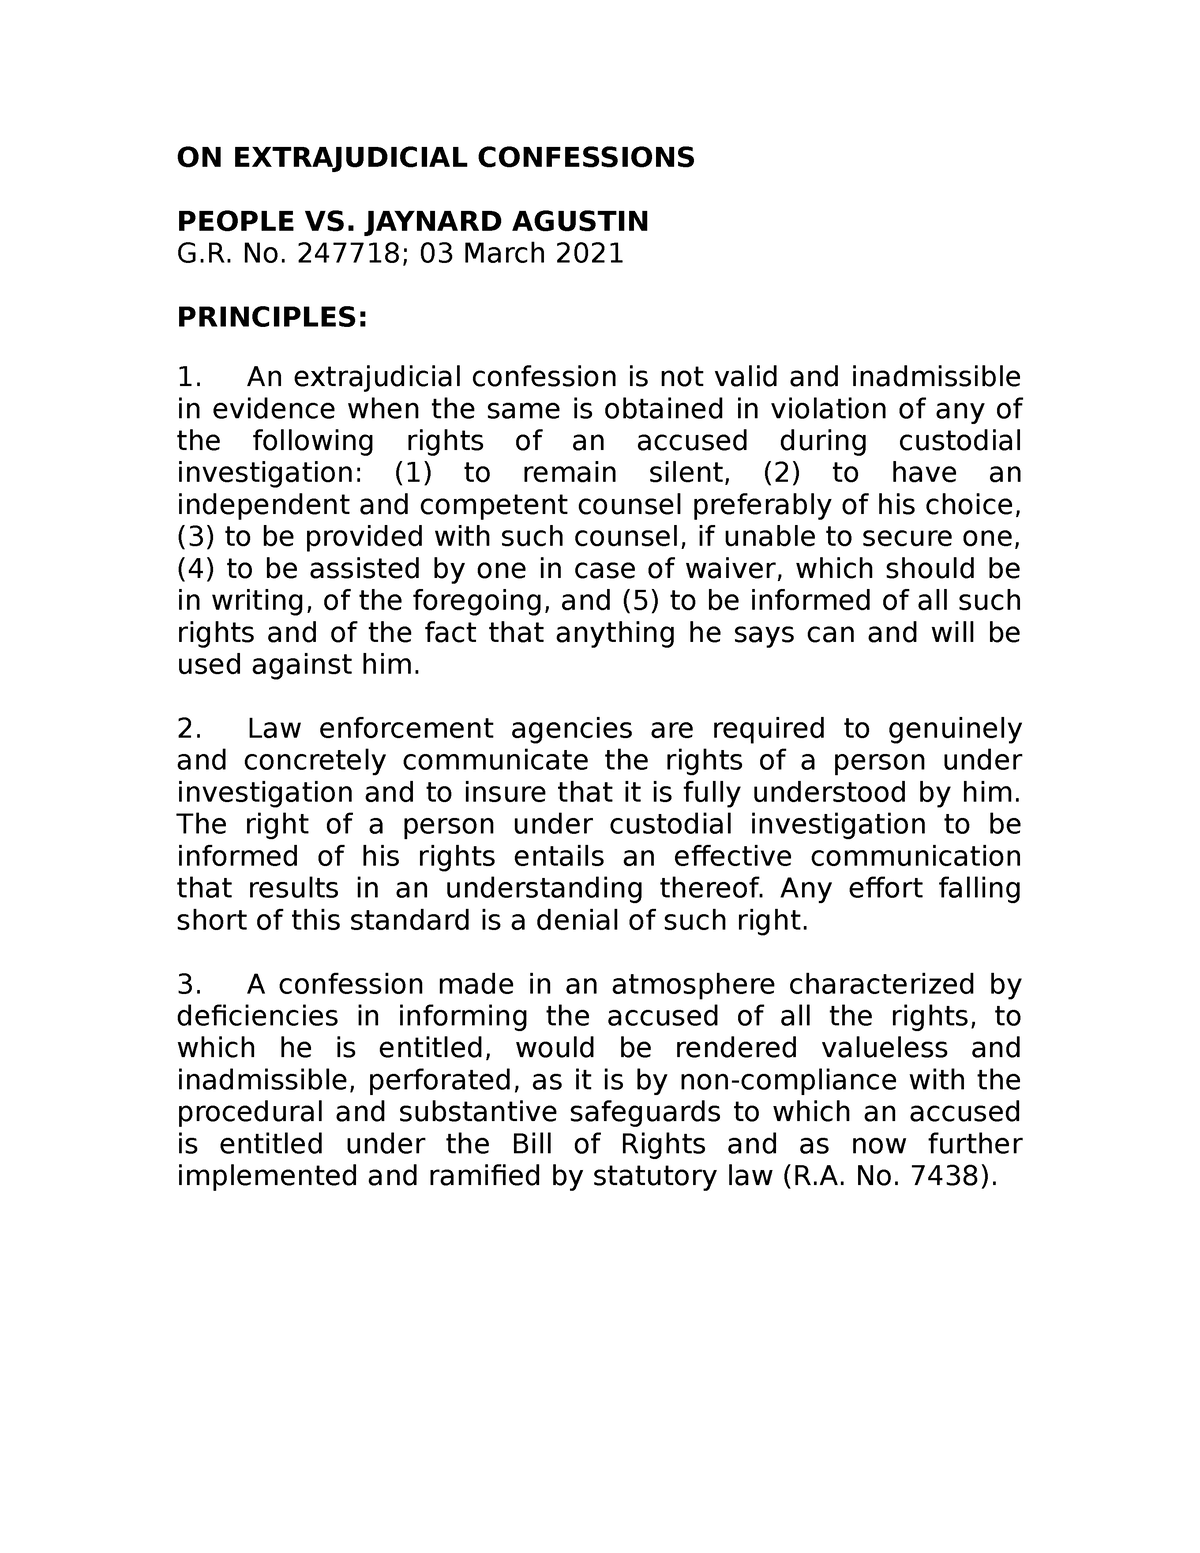 Philippine Supreme Court (SC) Jurisprudence 2021 ON EXTRAJUDICIAL